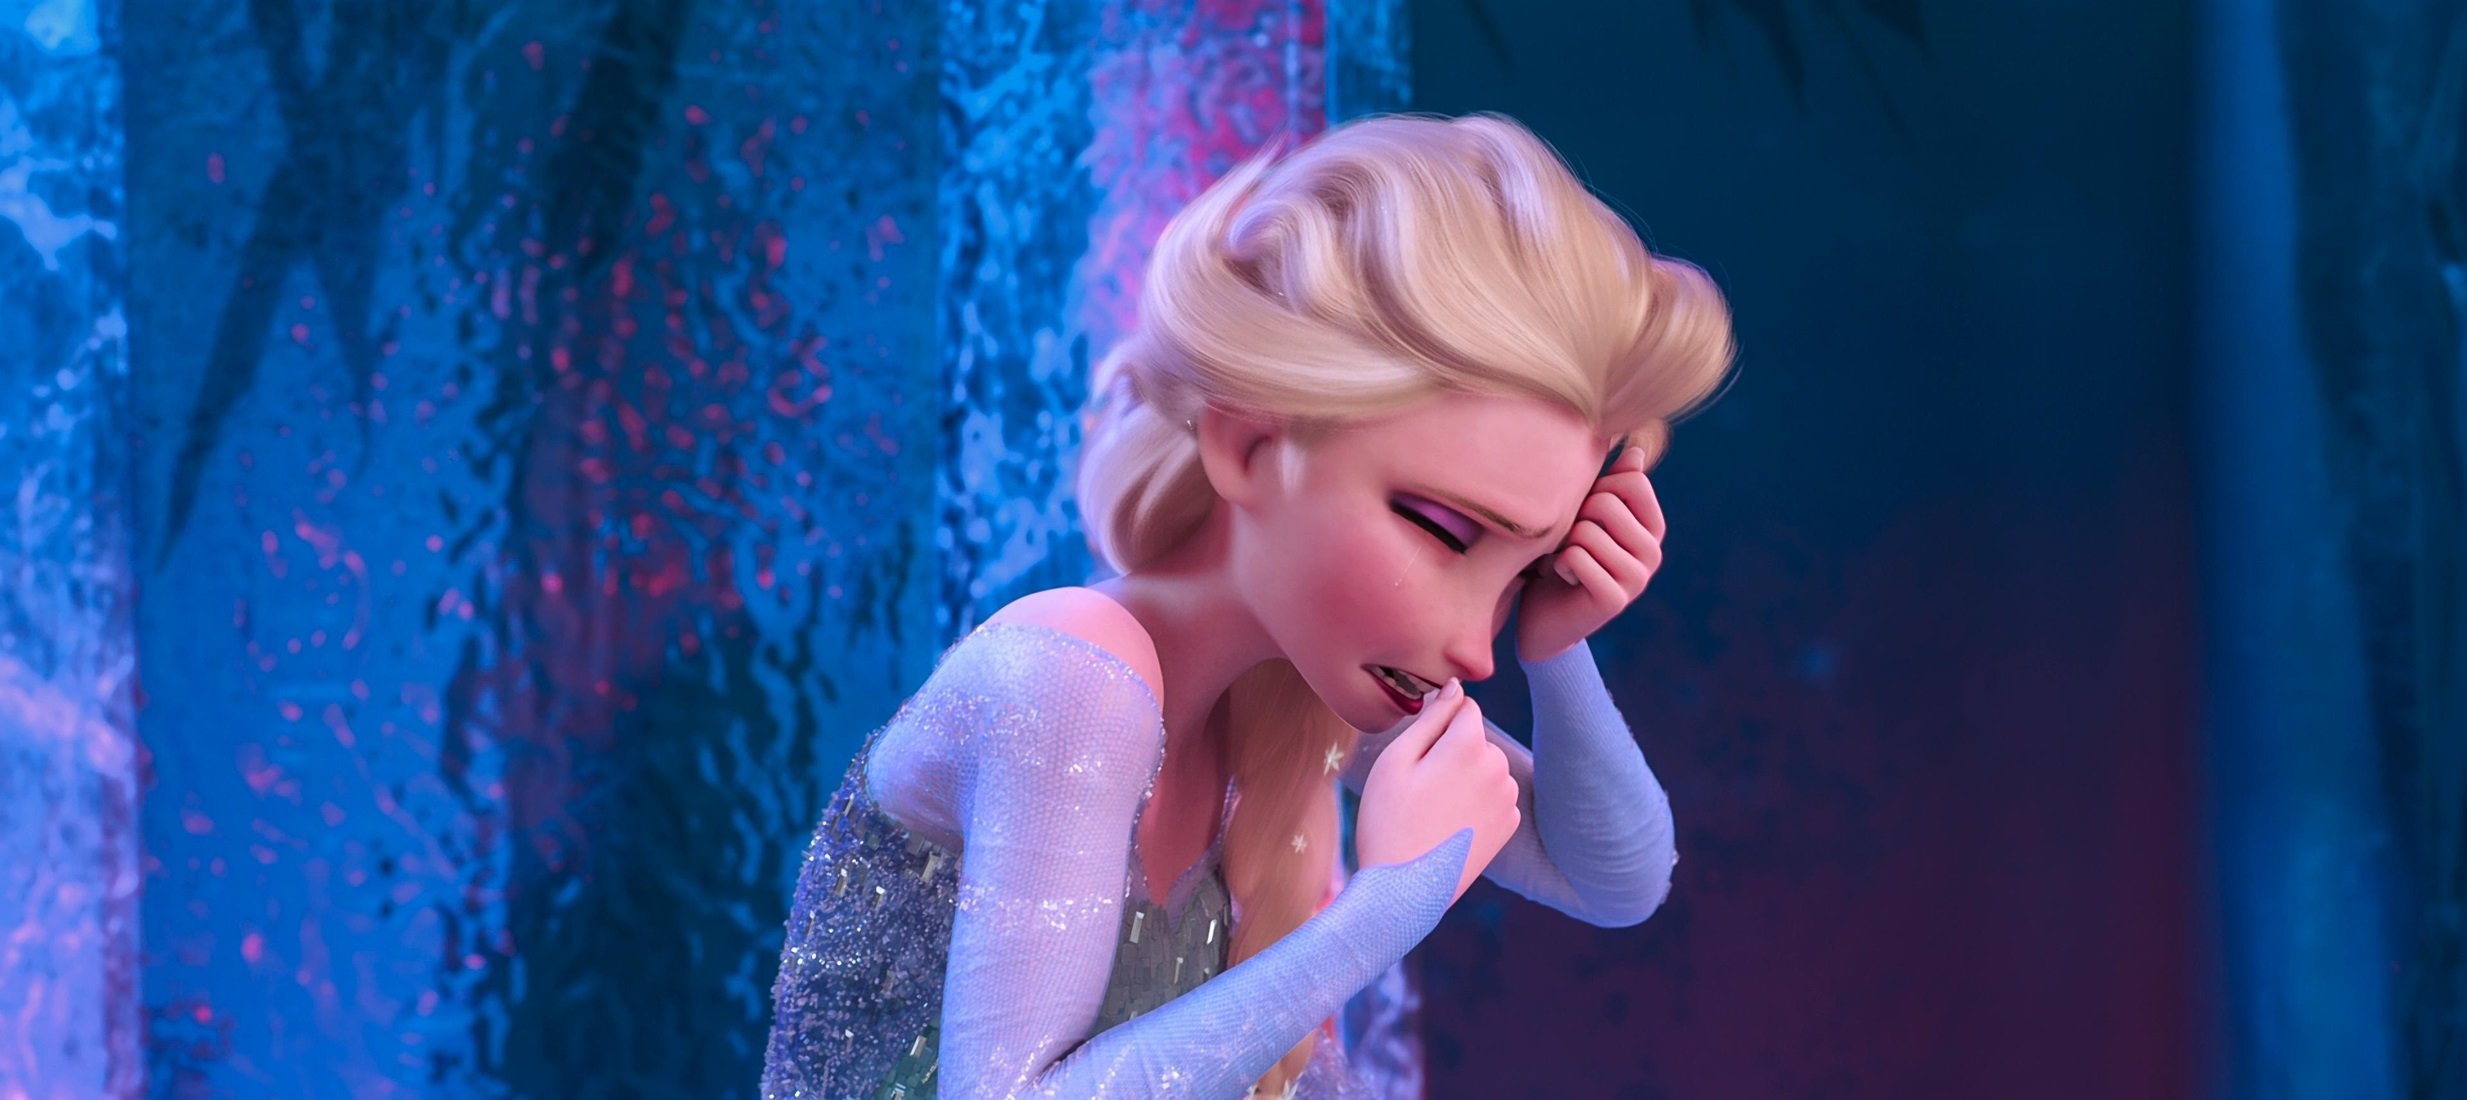 Telecinco traumatitza milers de nens tallant ‘Frozen’ per la meitat